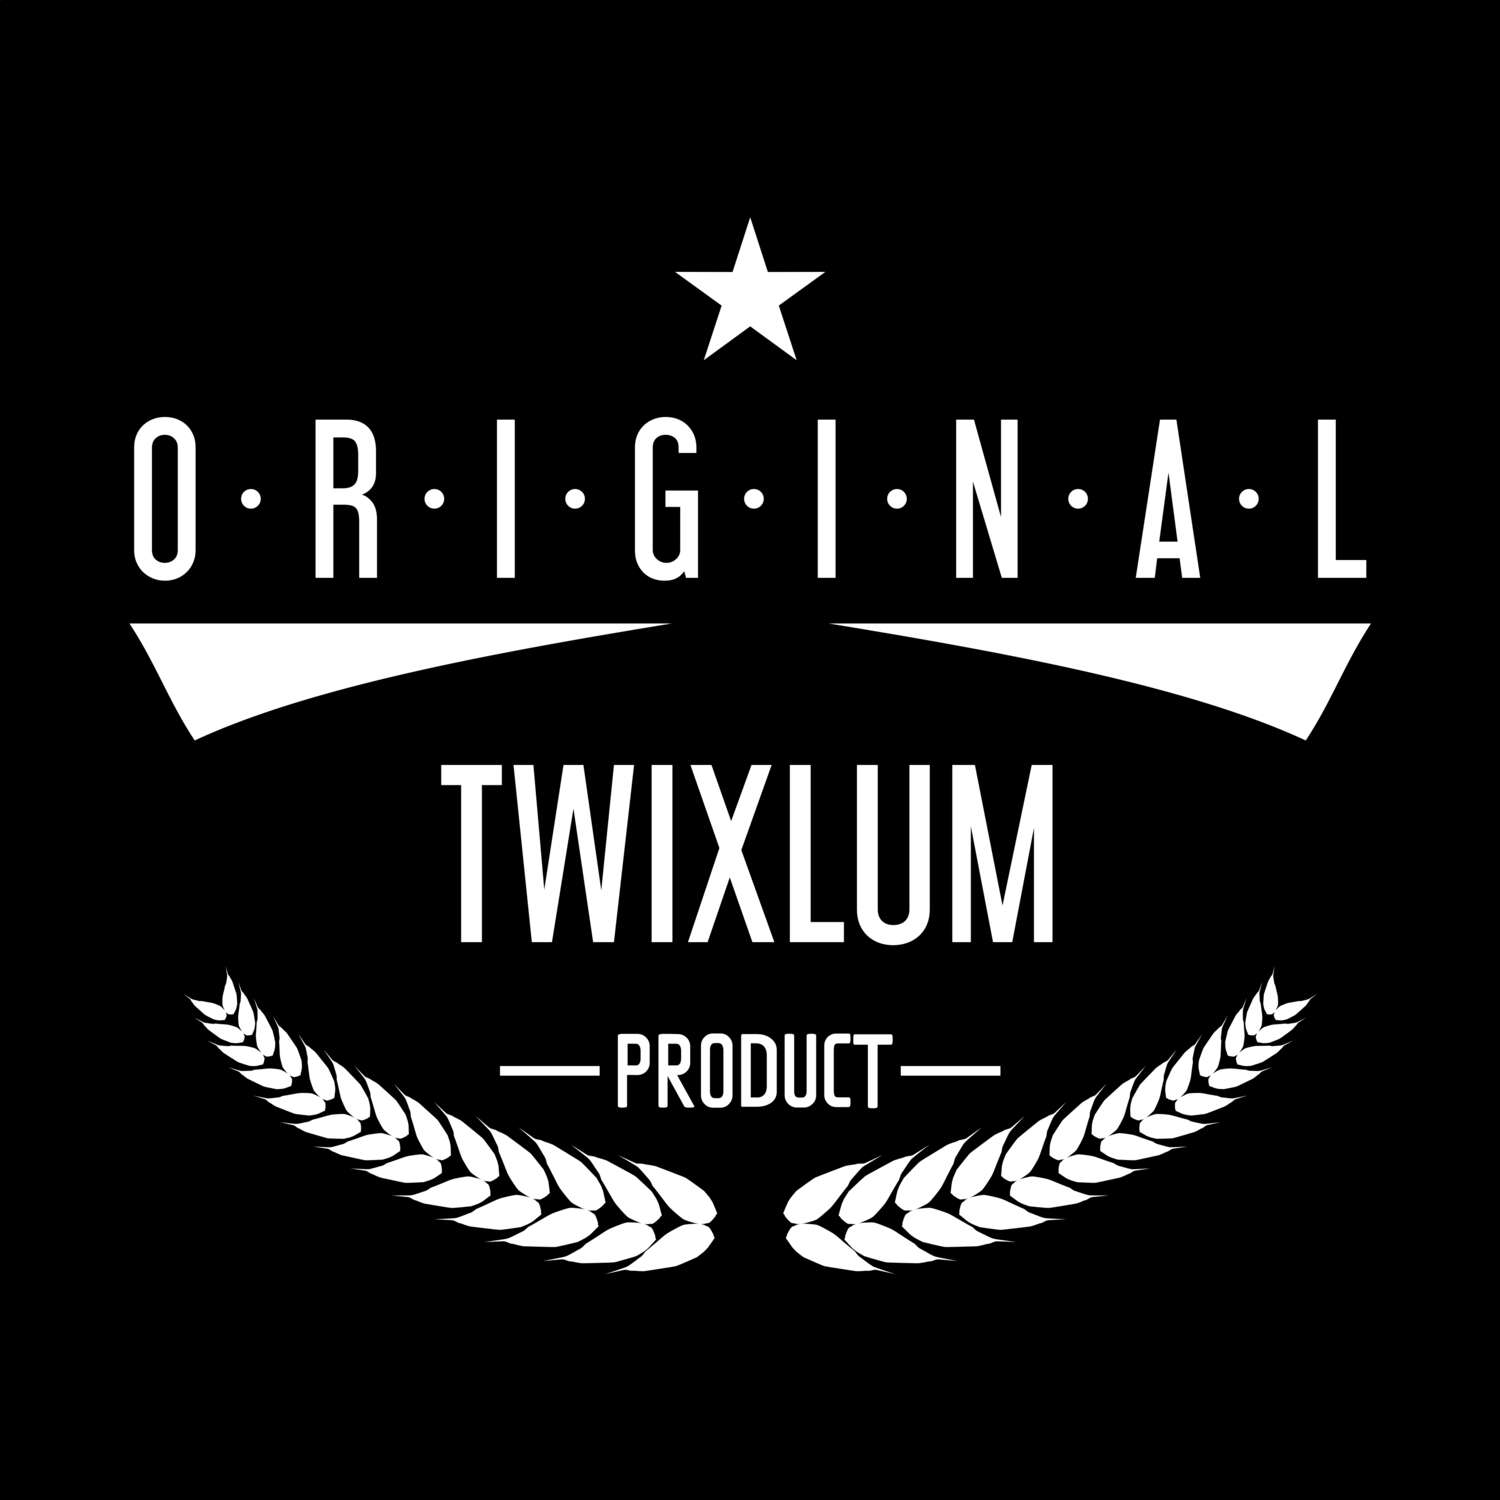 Twixlum T-Shirt »Original Product«